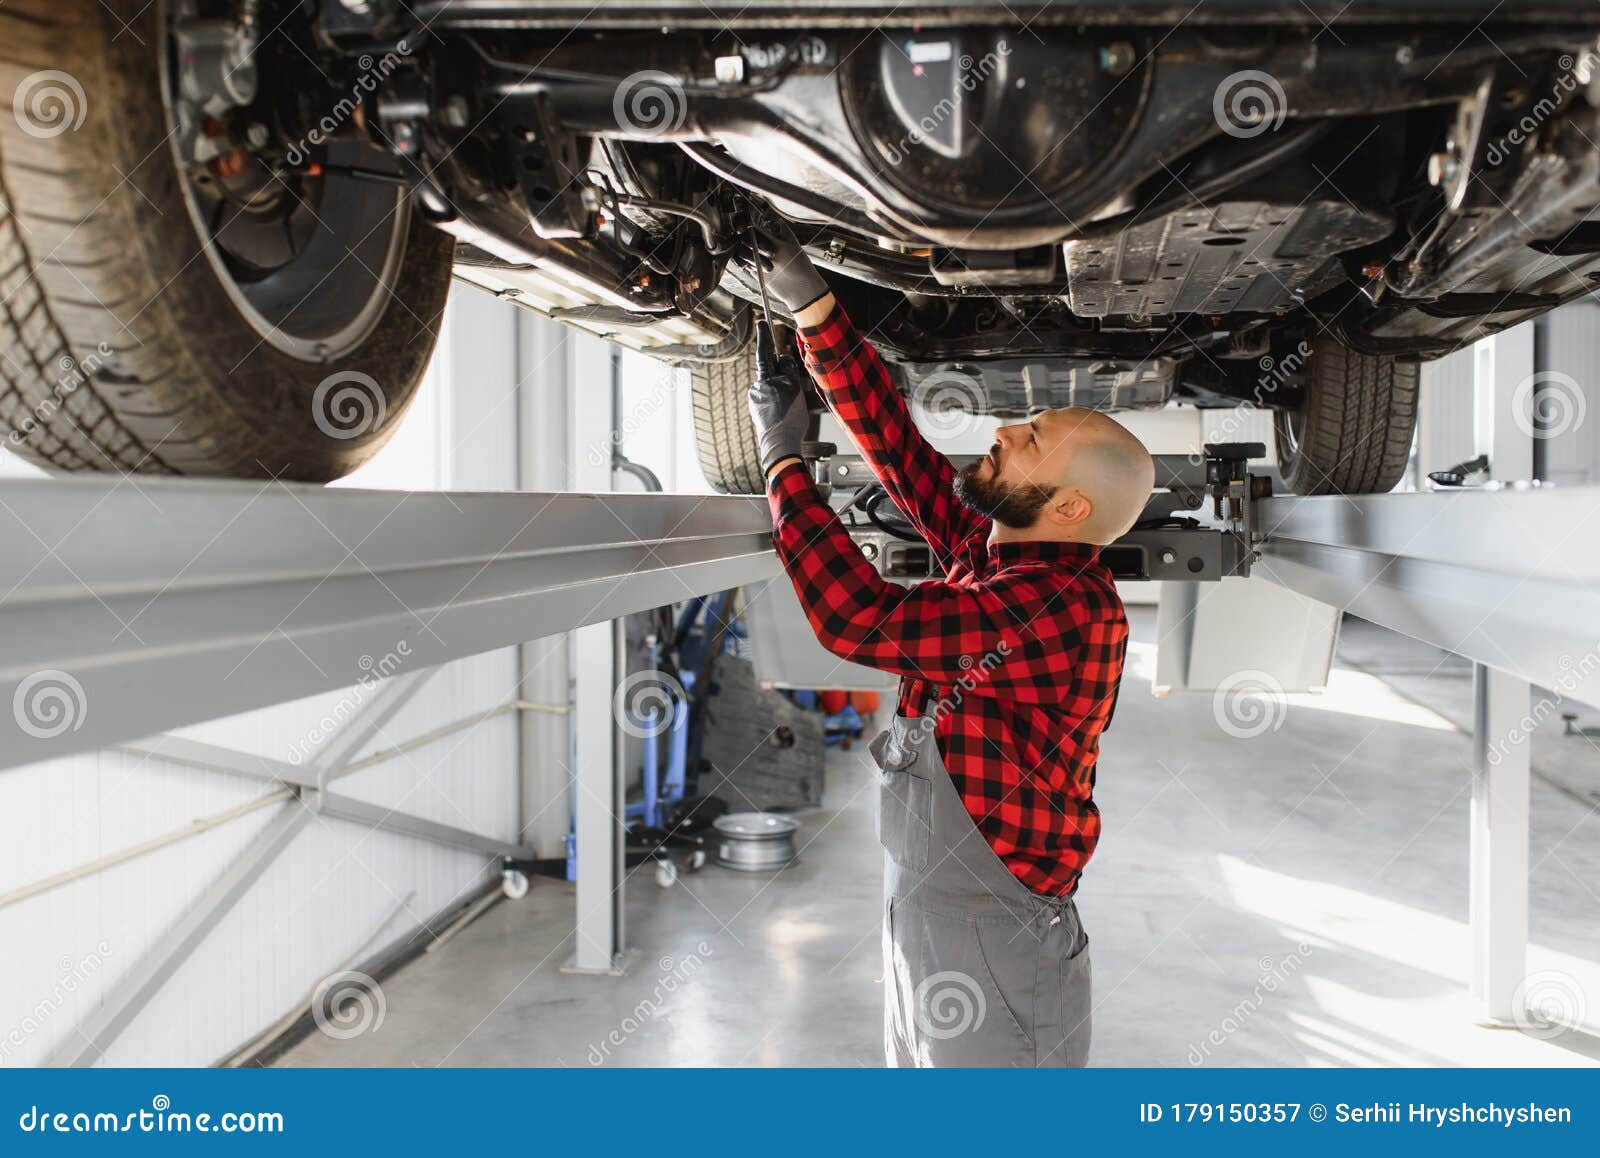 Mechanic Working Under Car At The Repair Garage. Auto Mechanic Working